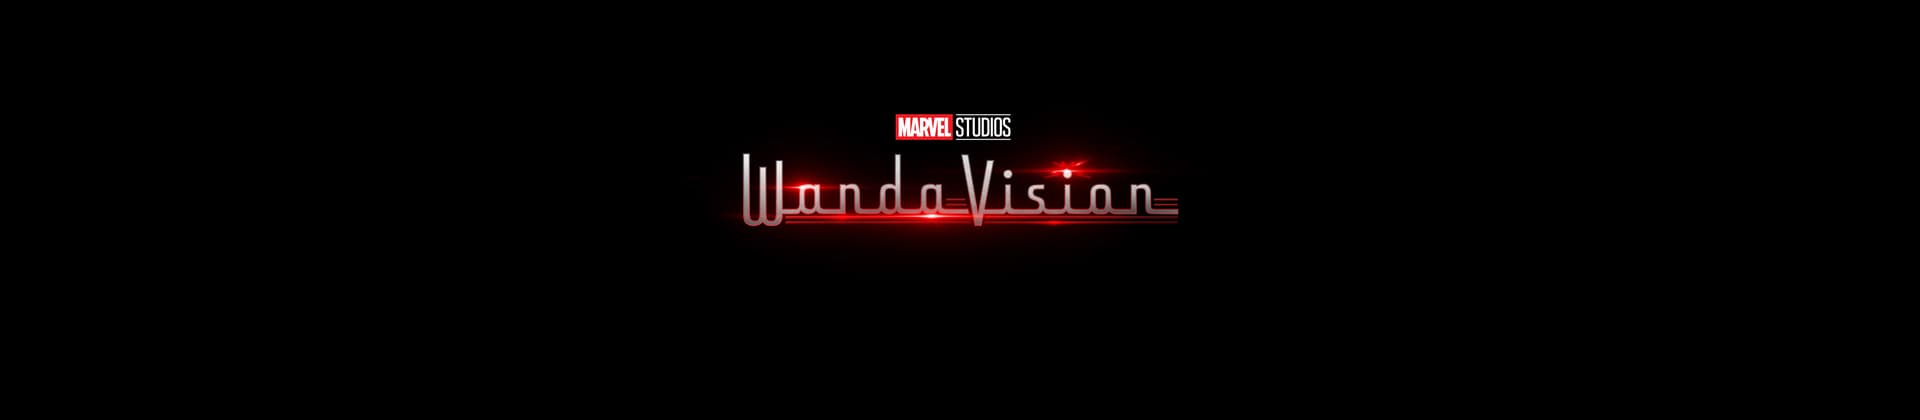 WandaVision TV Show Season 1 Logo On Black